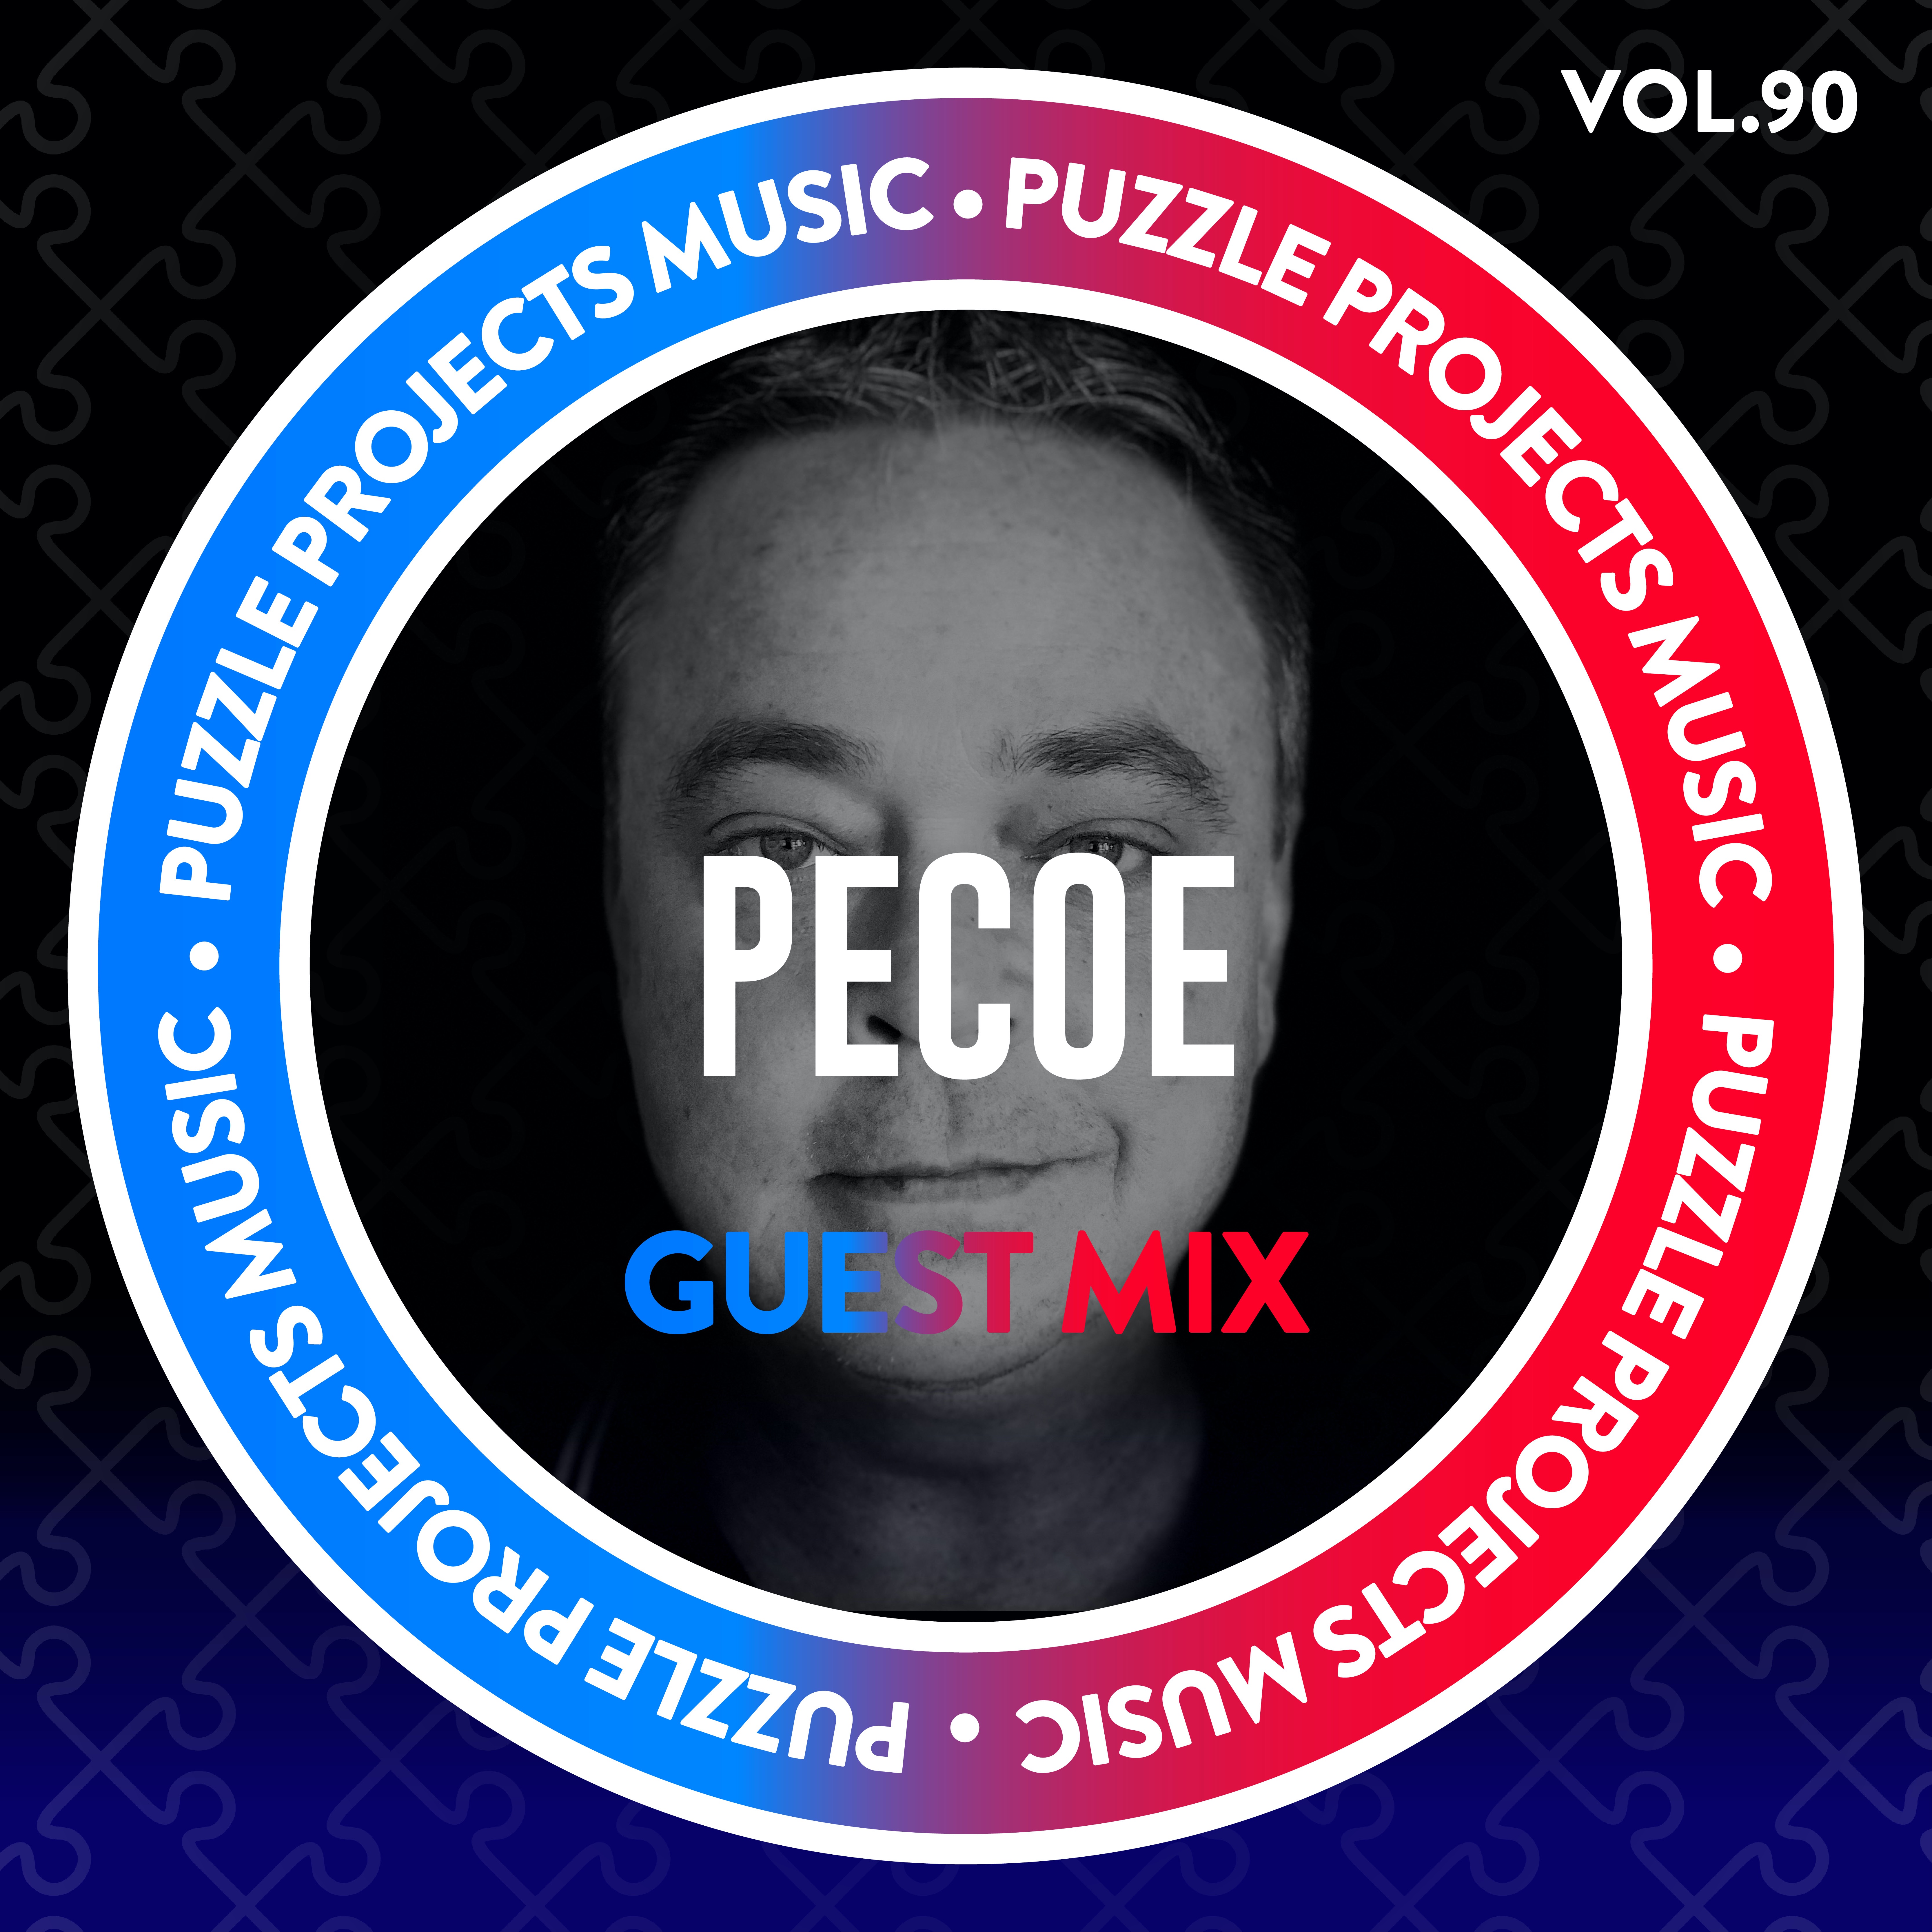 Preuzimanje datoteka Pecoe - PuzzleProjectsMusic Guest Mix Vol.90